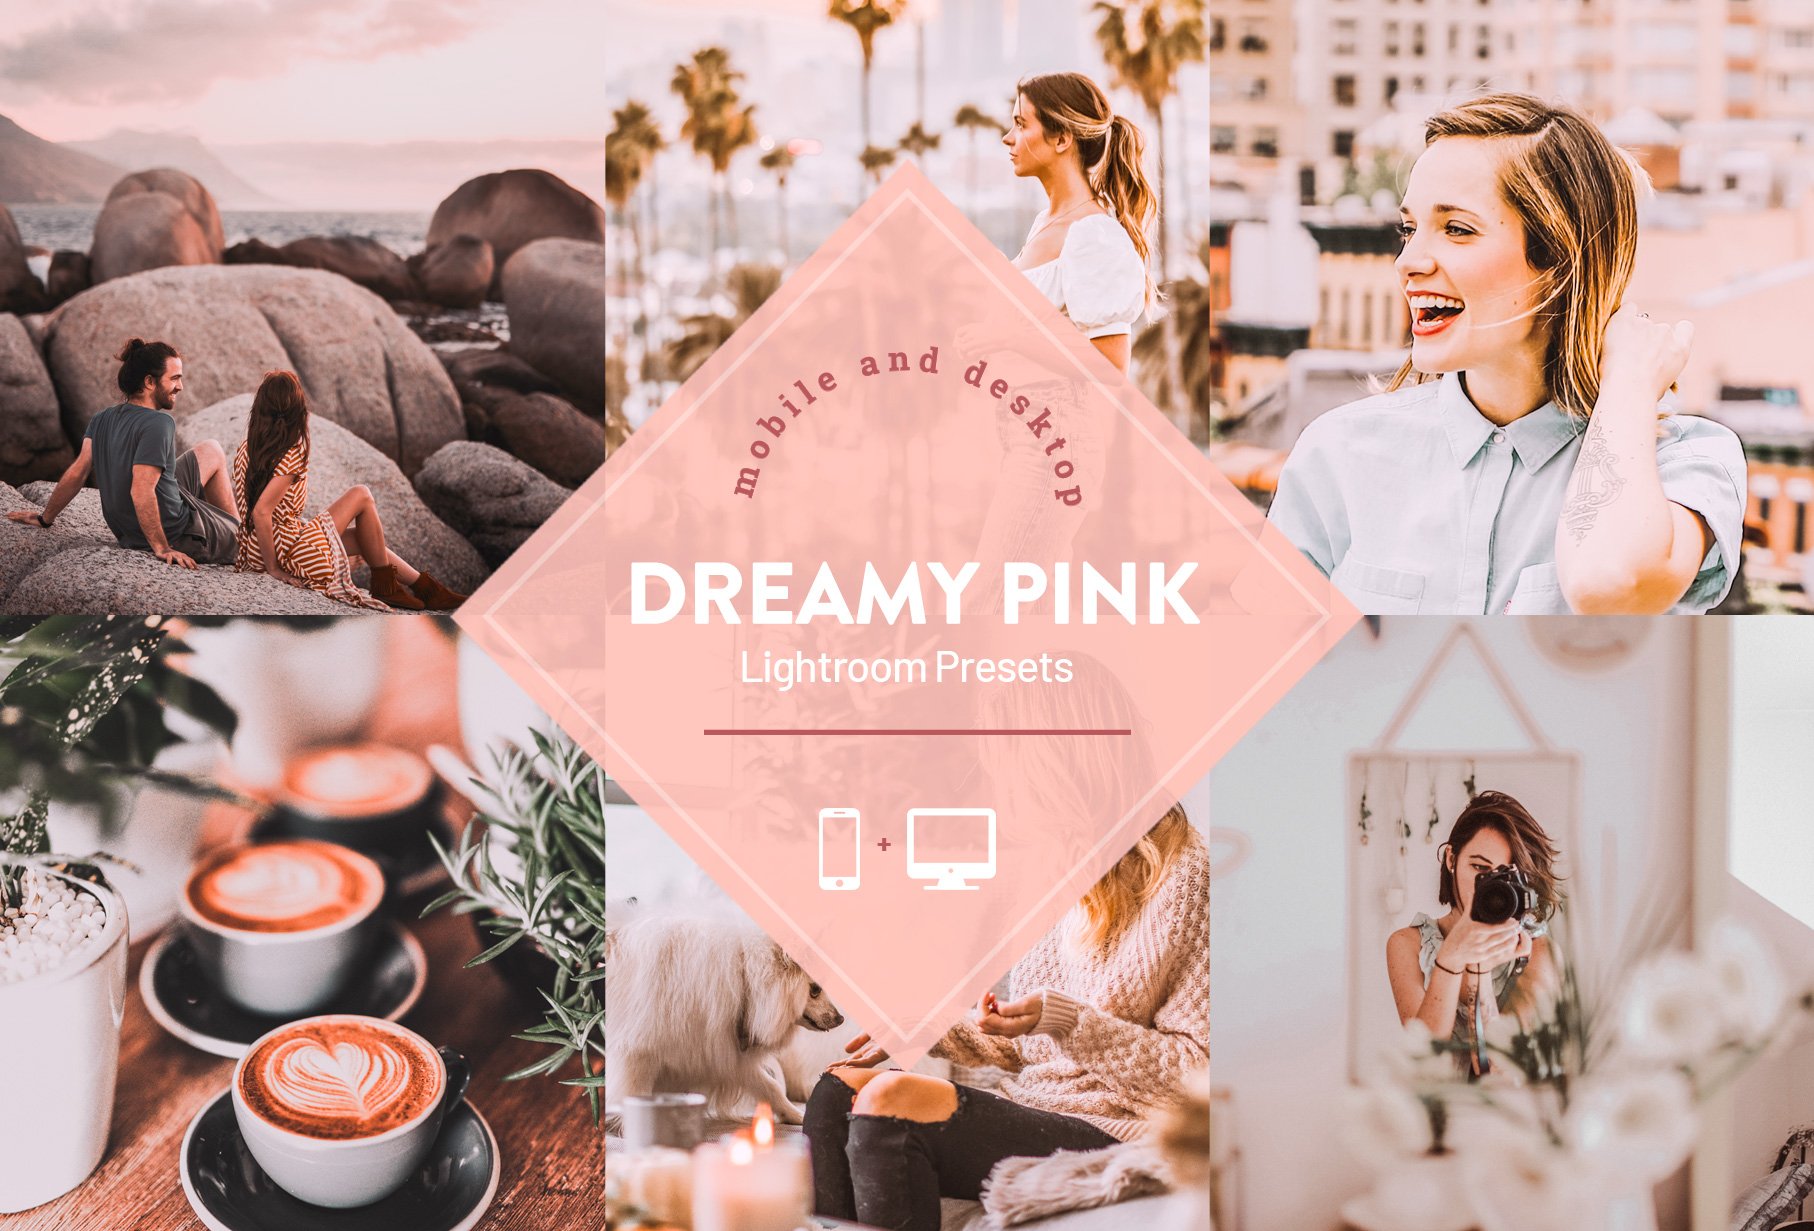 Dreamy Pink Lightroom Presetscover image.